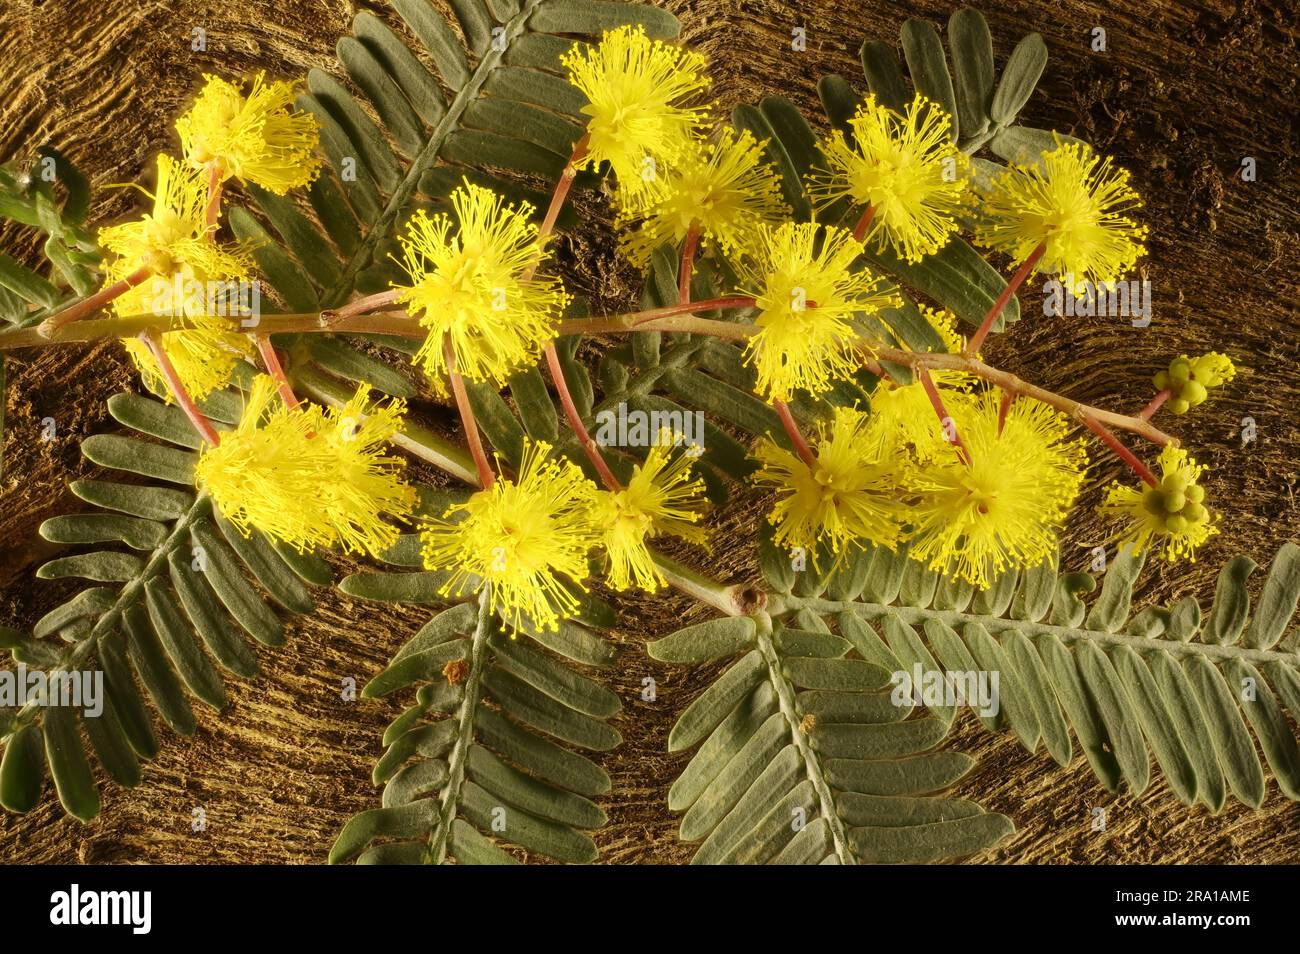 Isolated stem of Cootamundra Wattle (Acacia baileyana) flowers and foliage against bark. Australian native tree. Stock Photo